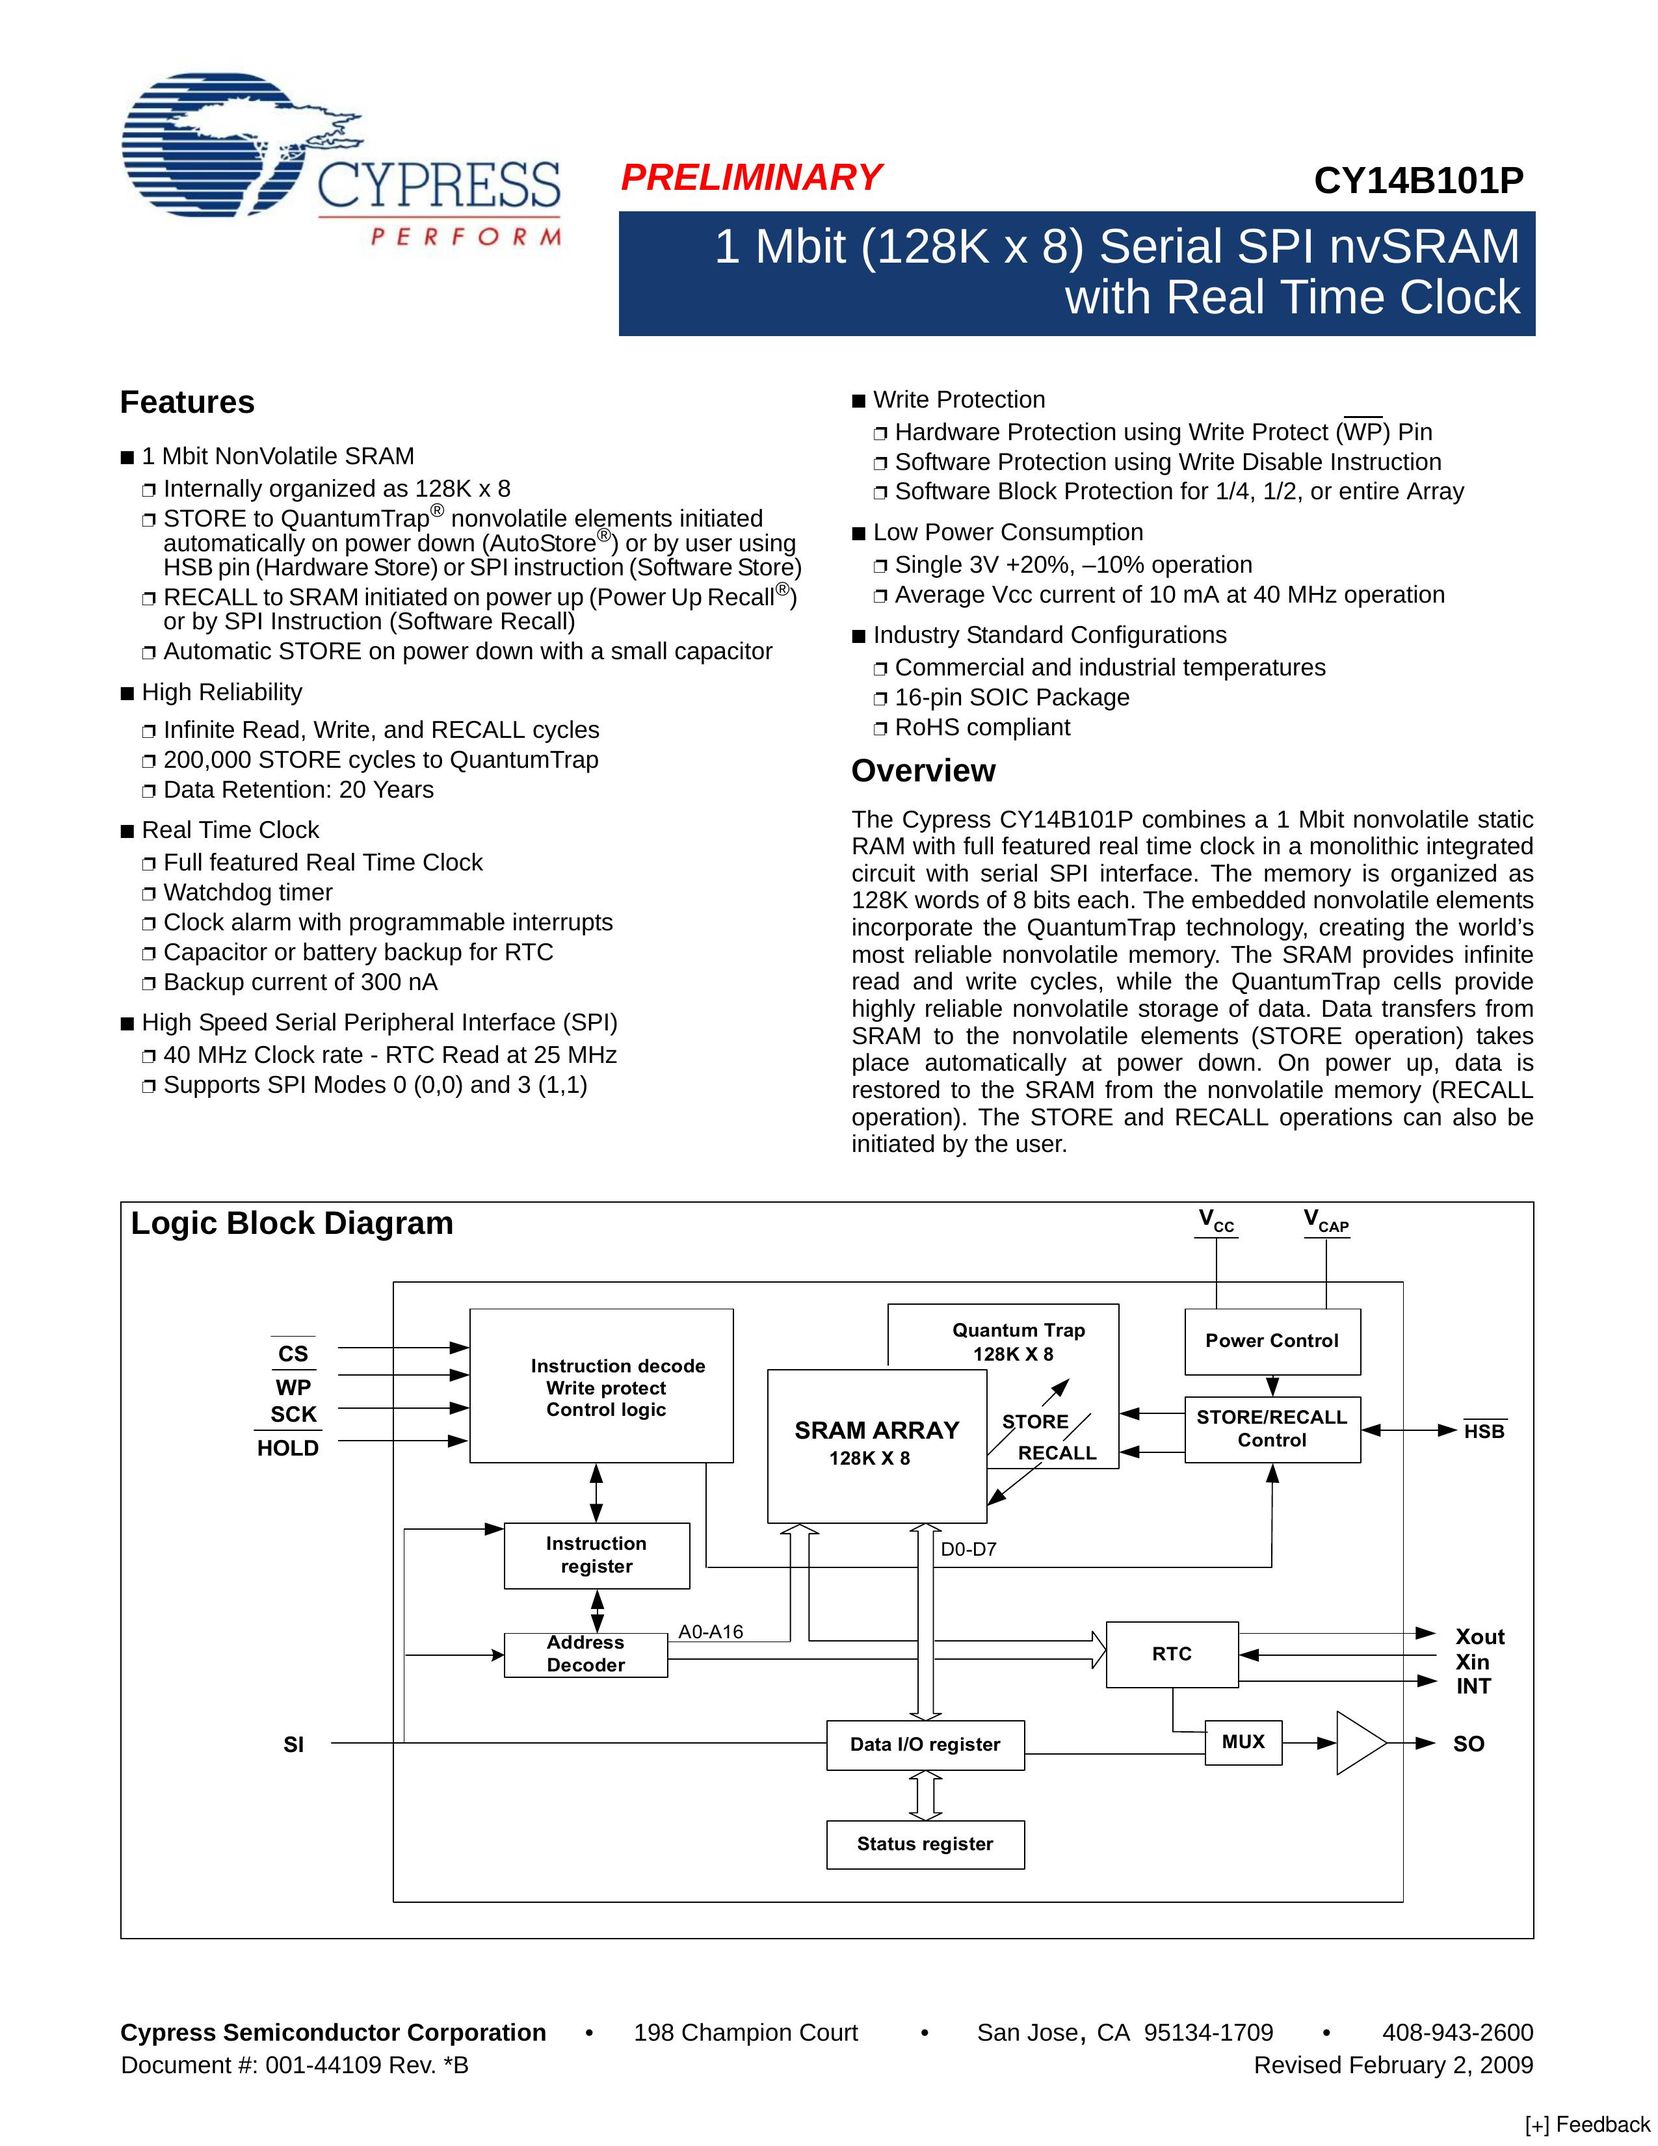 Cypress CY14B101P Computer Hardware User Manual